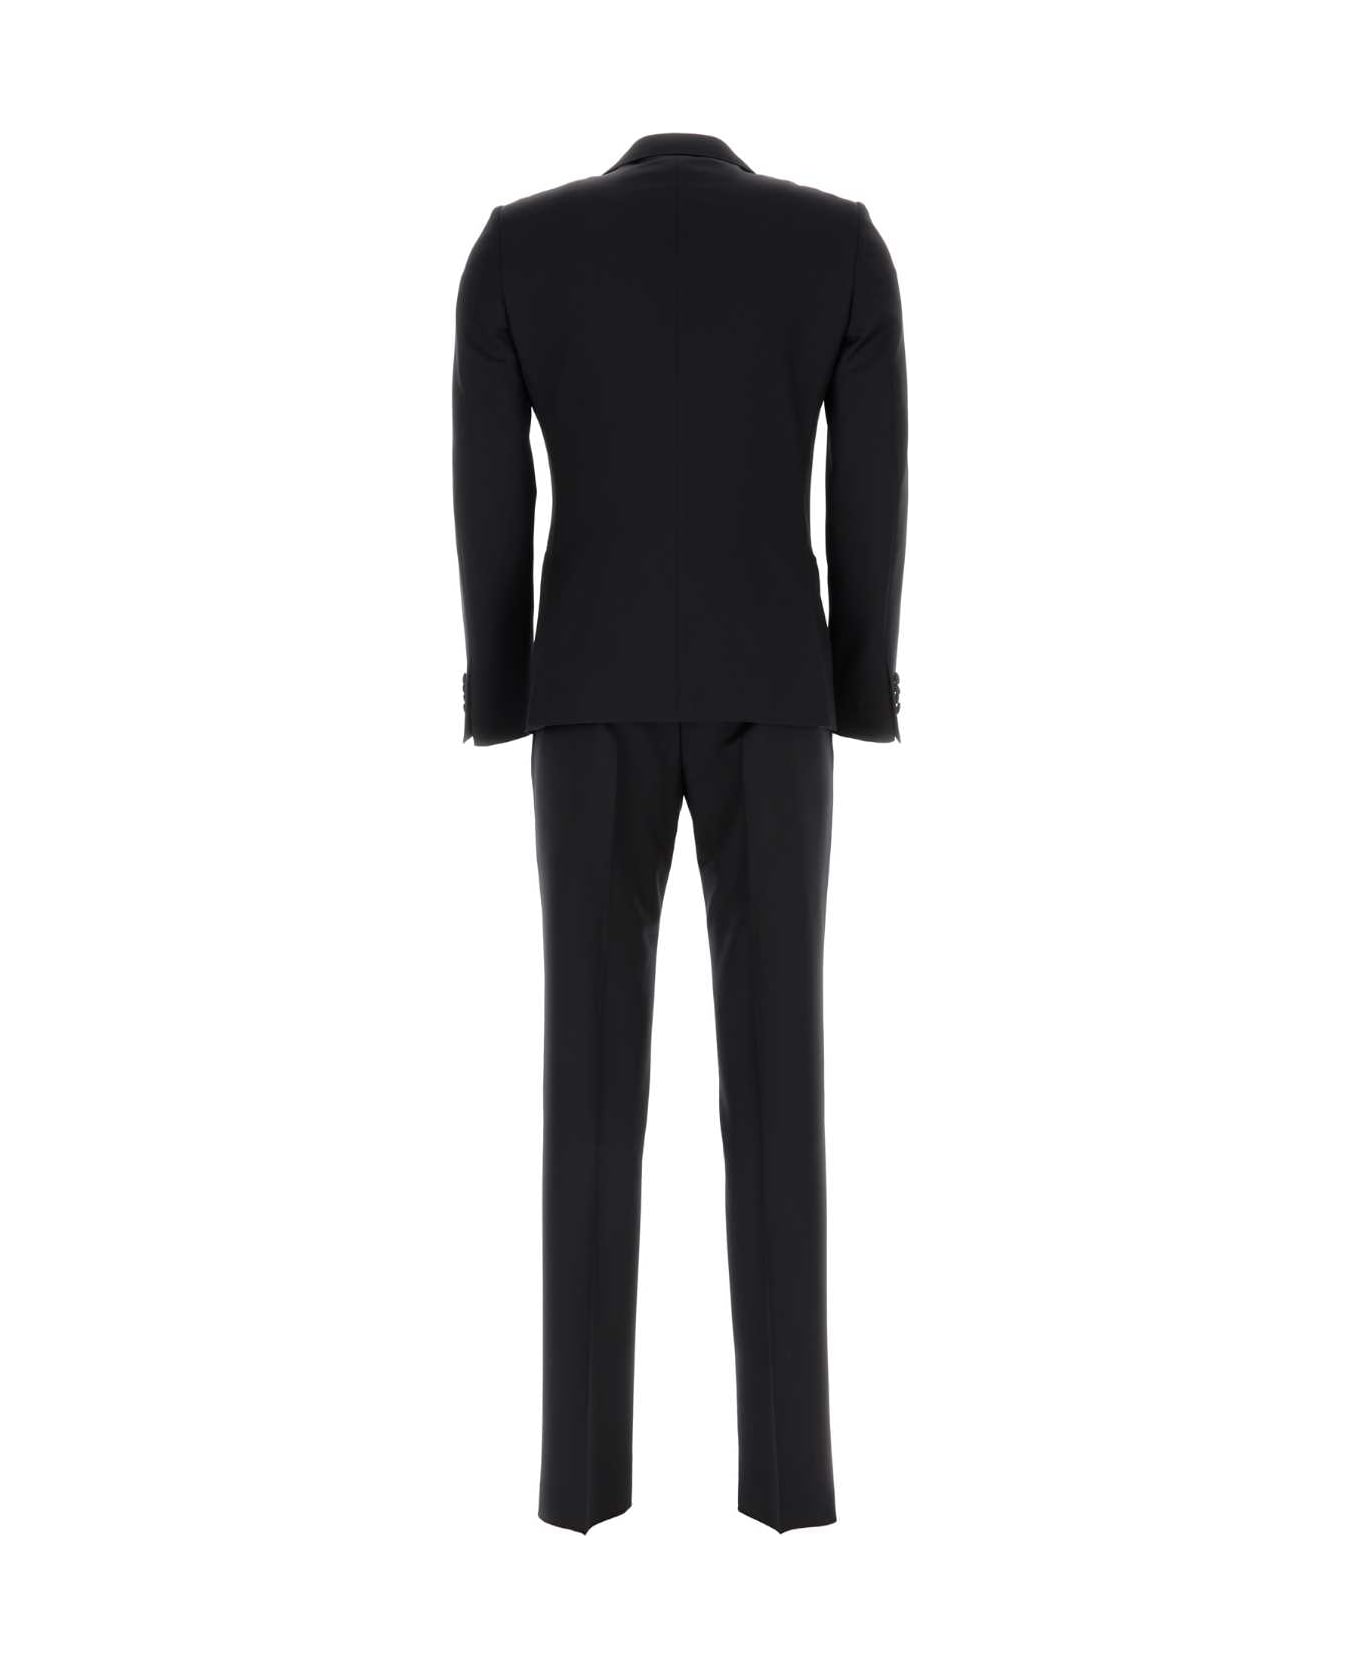 Zegna Midnight Blue Wool Blend Suit - 8R